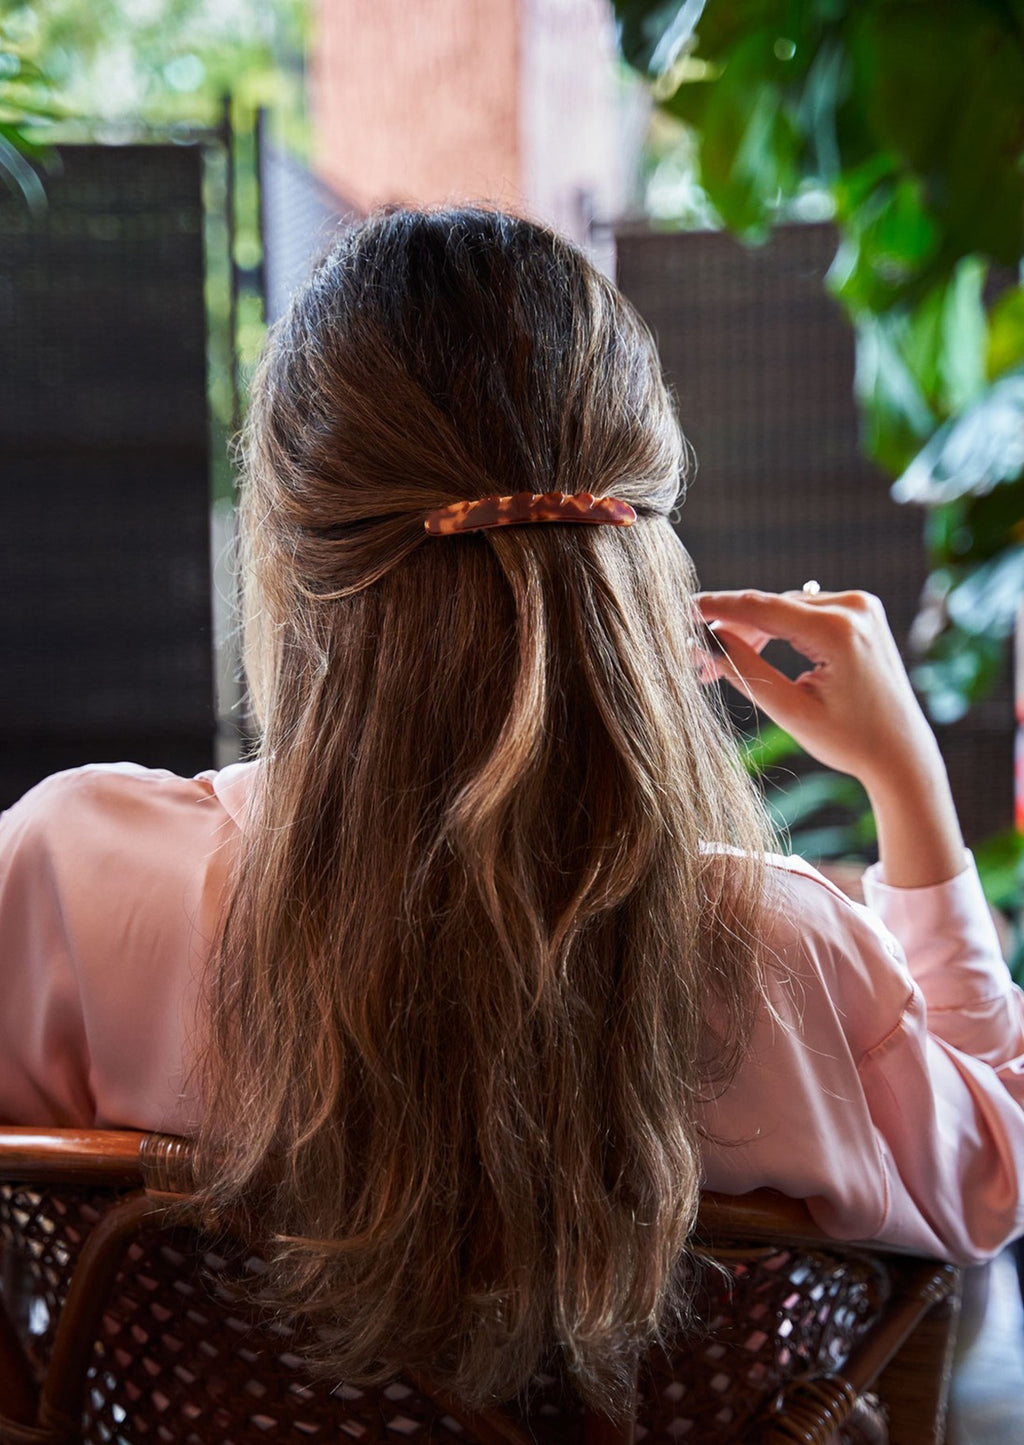 4: A woman wearing a baguette hair clip.